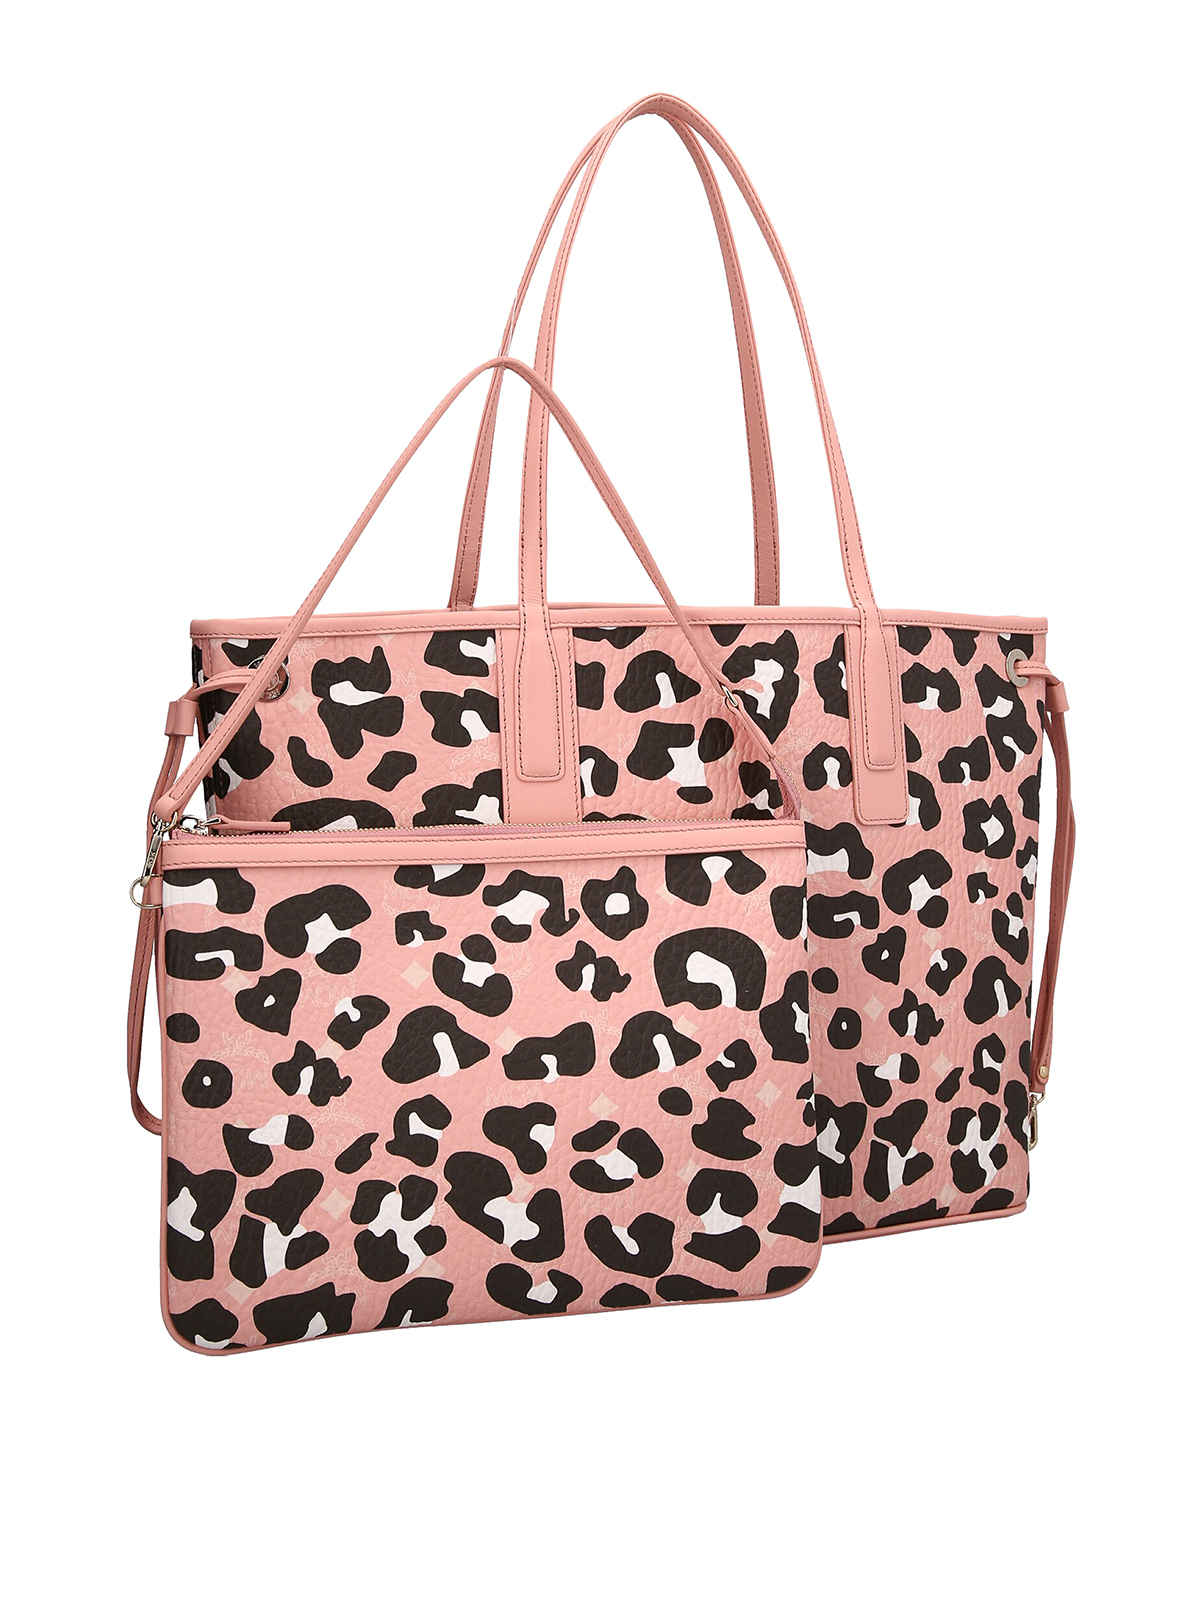 MCM Pink Tote Bags